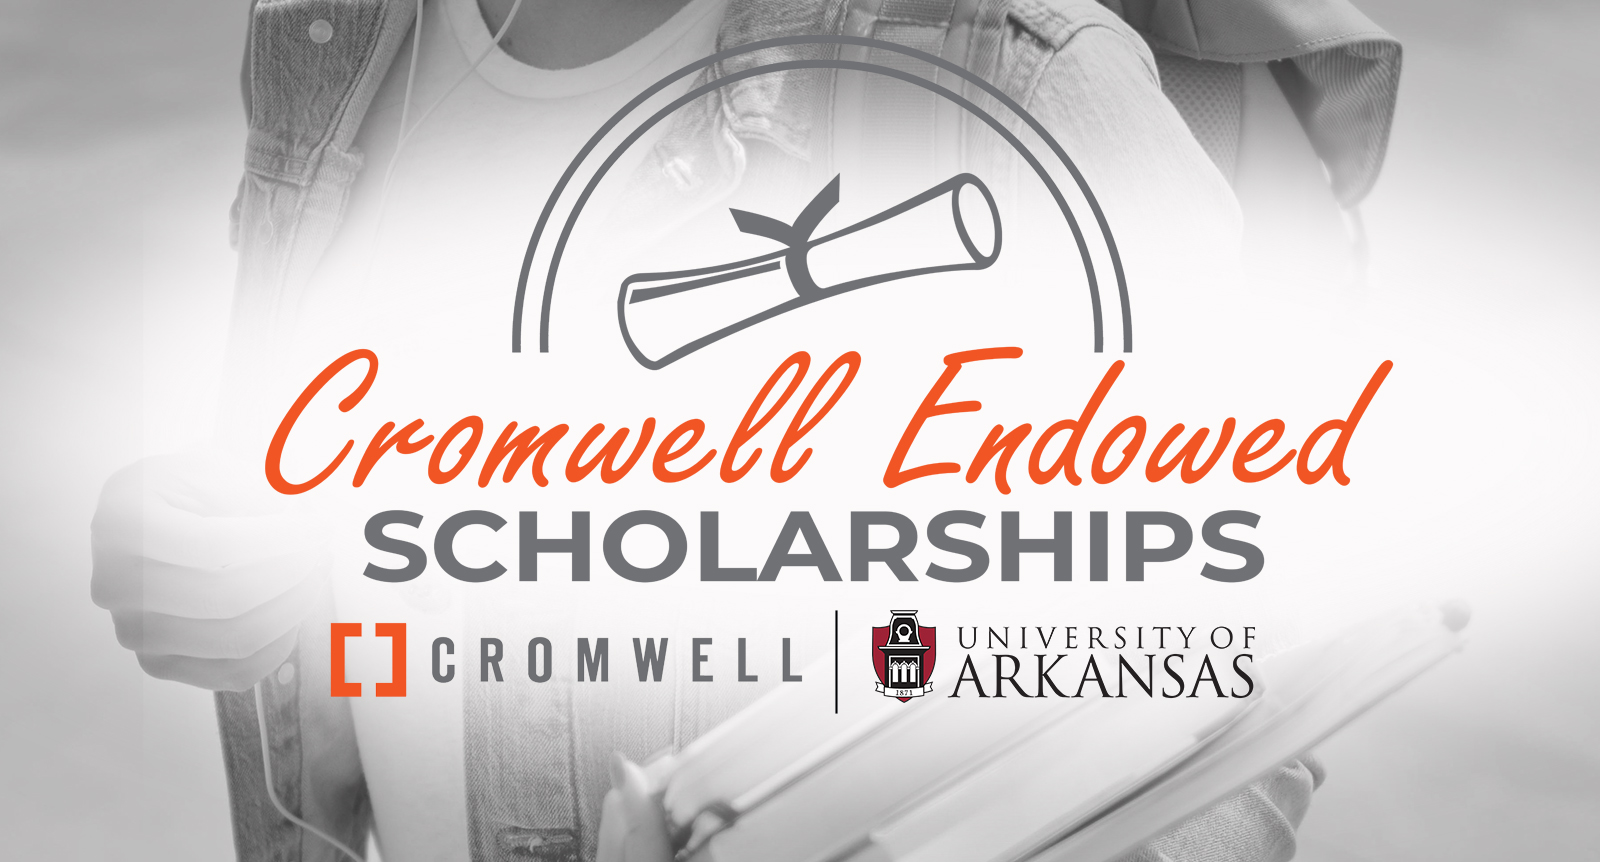 Cromwell Endowed Scholarships